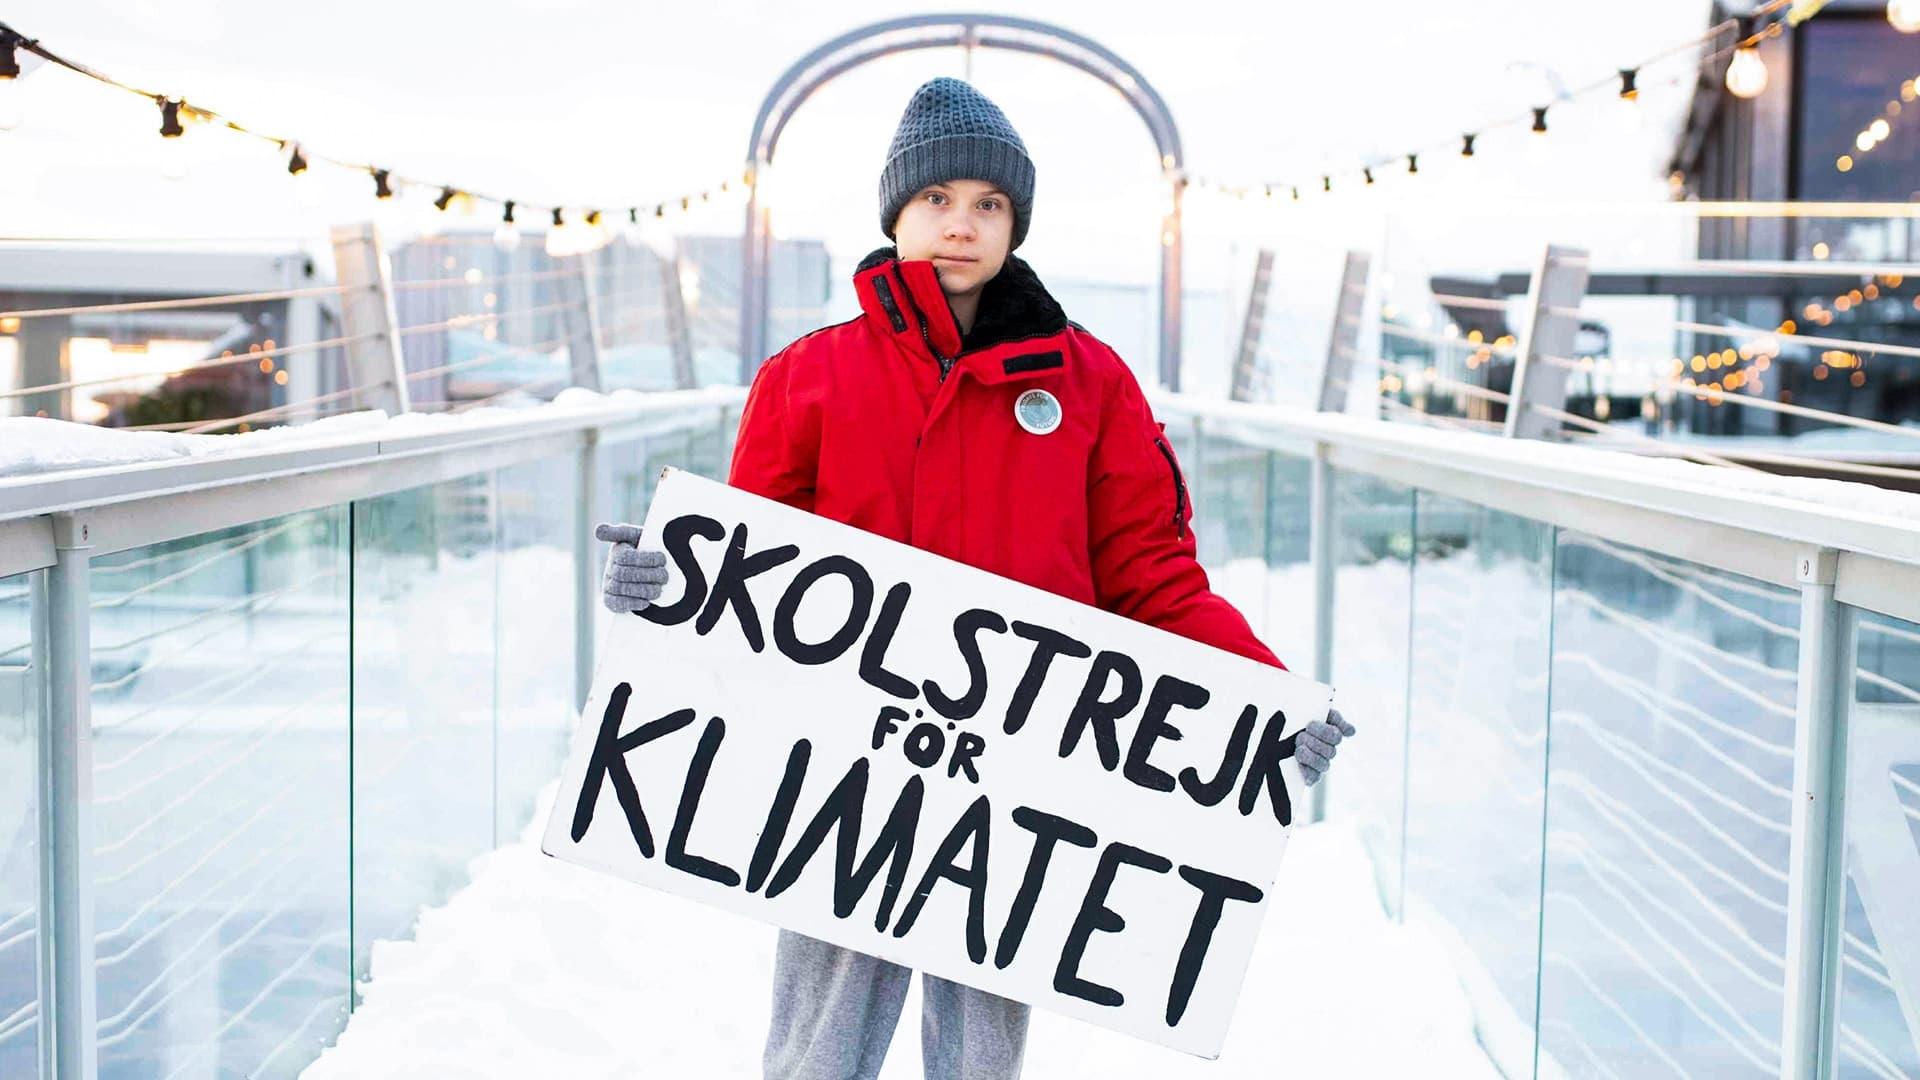 Greta Thunberg: A Year to Change the World backdrop